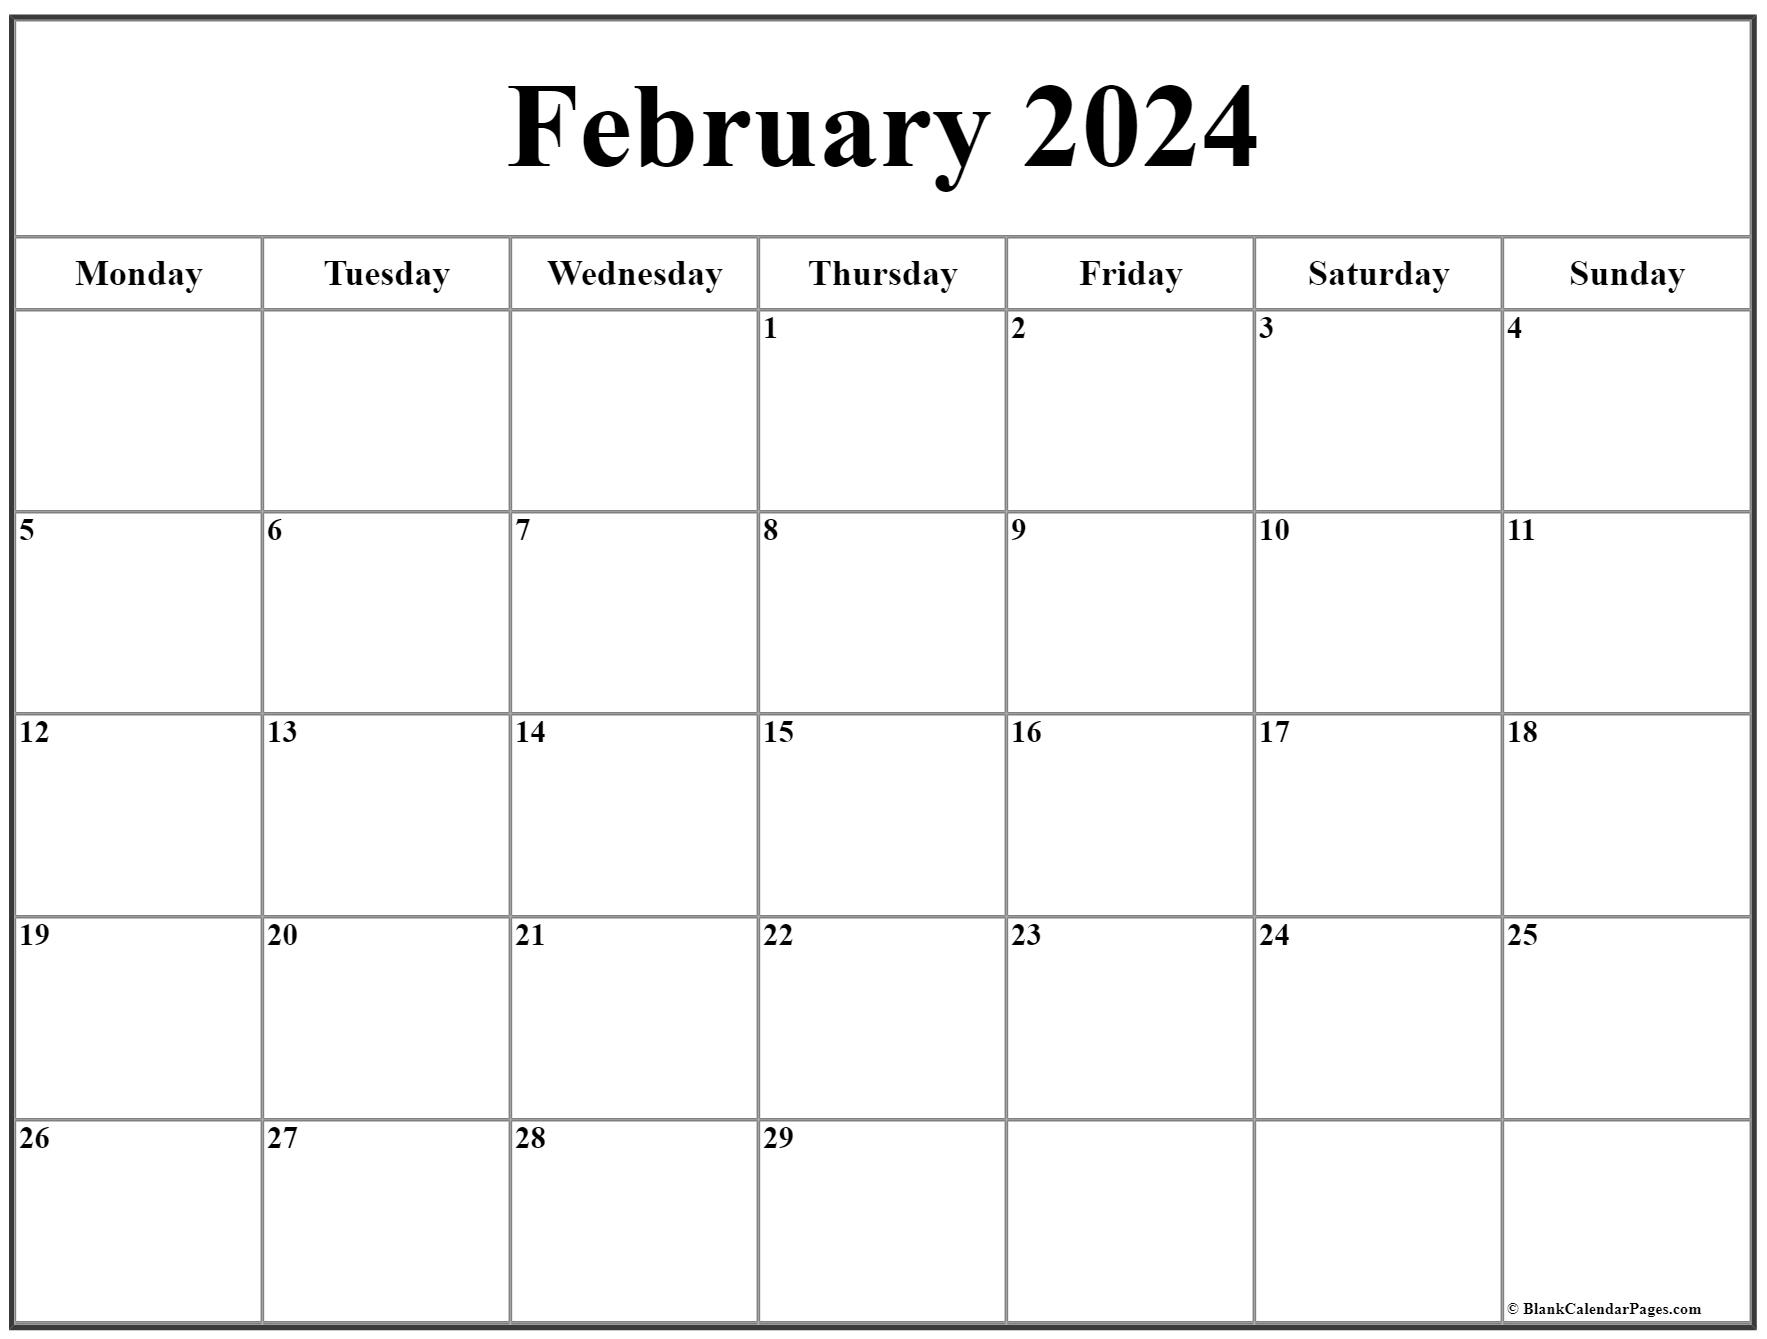 February 2024 Monday Calendar | Monday to Sunday